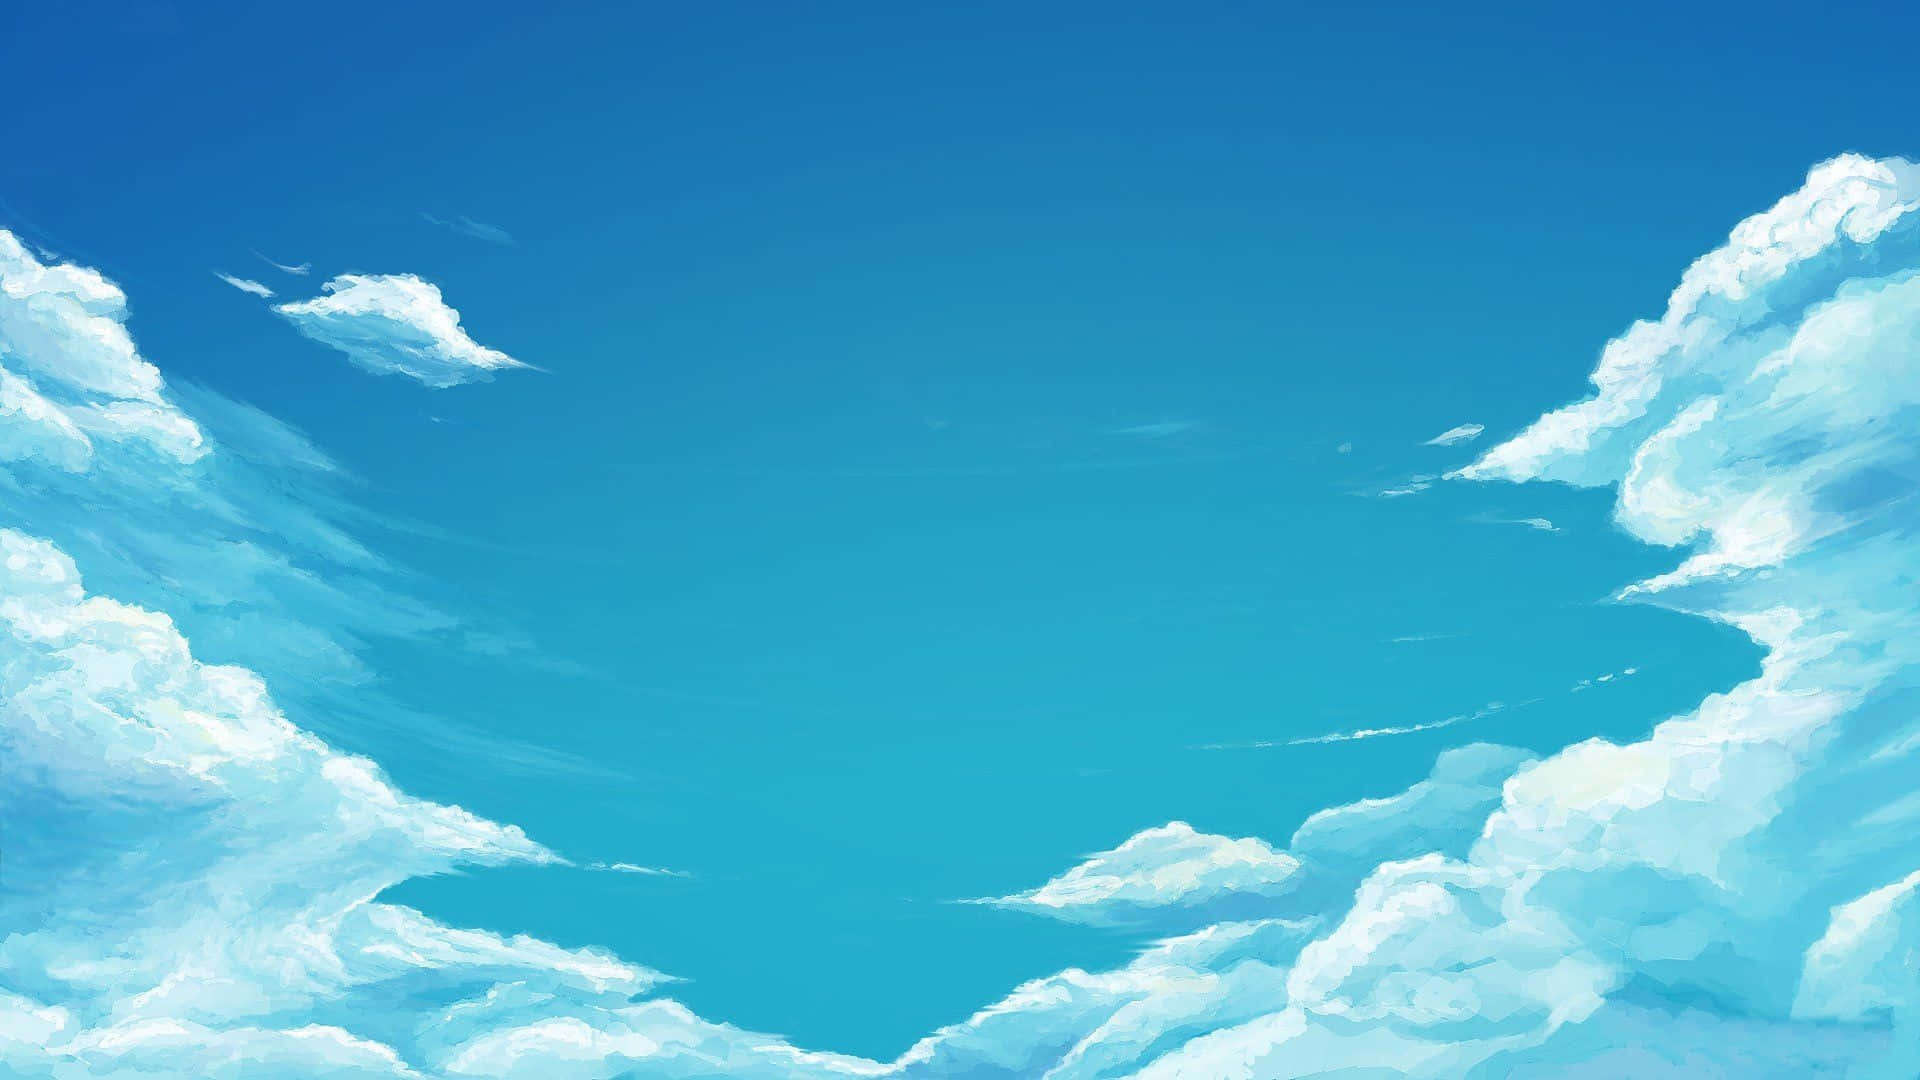 Unending Horizons of a Royal Blue Anime Sky Wallpaper